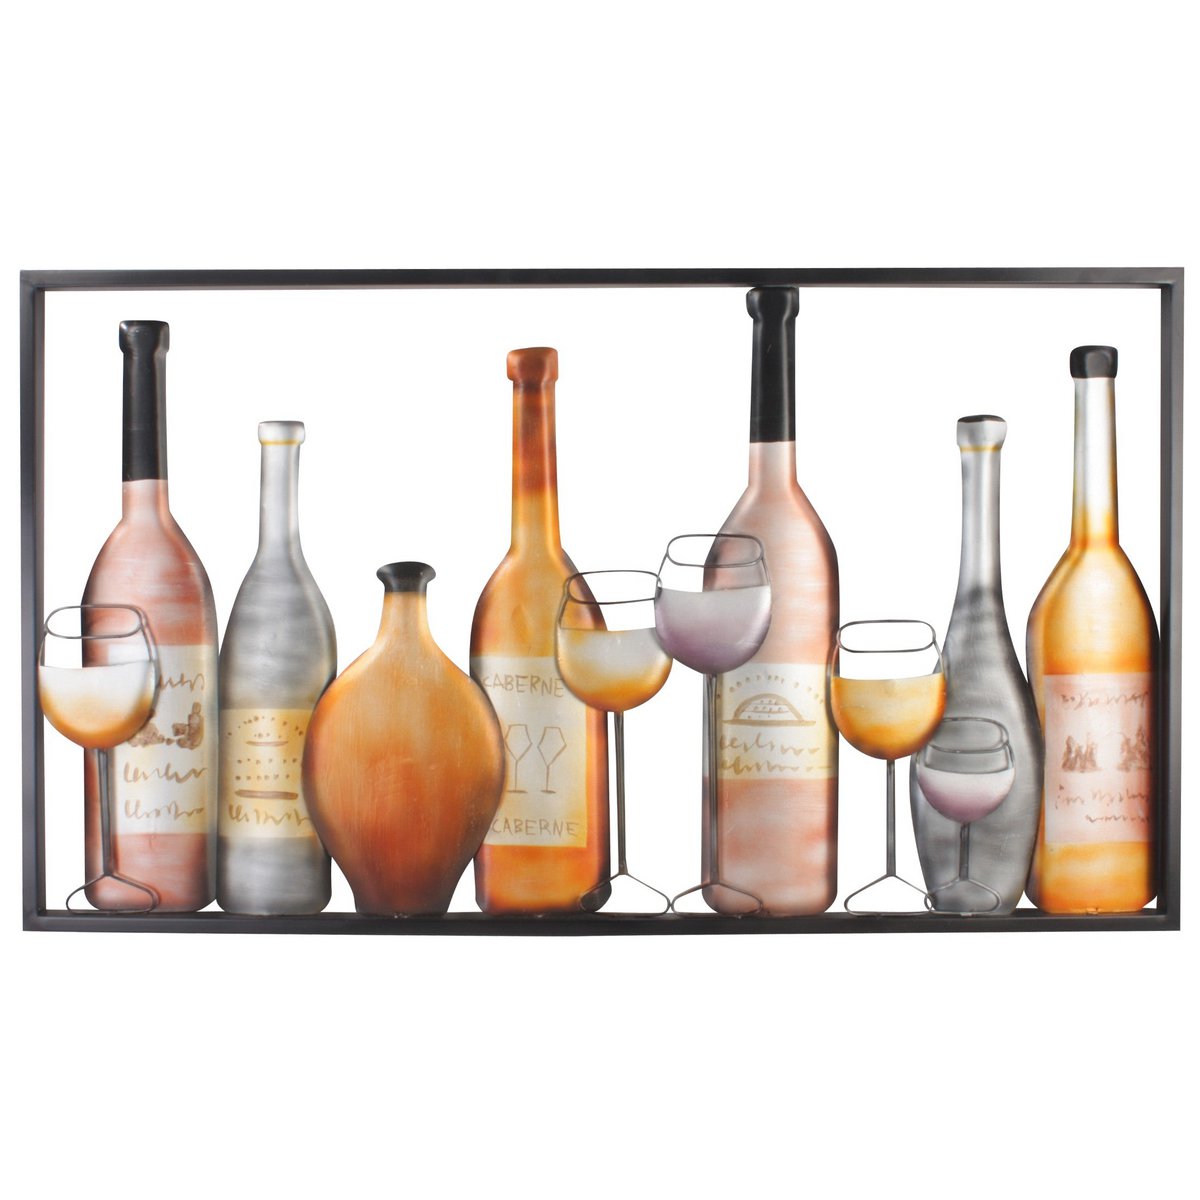 Bottles and glasses - 100x57 cm